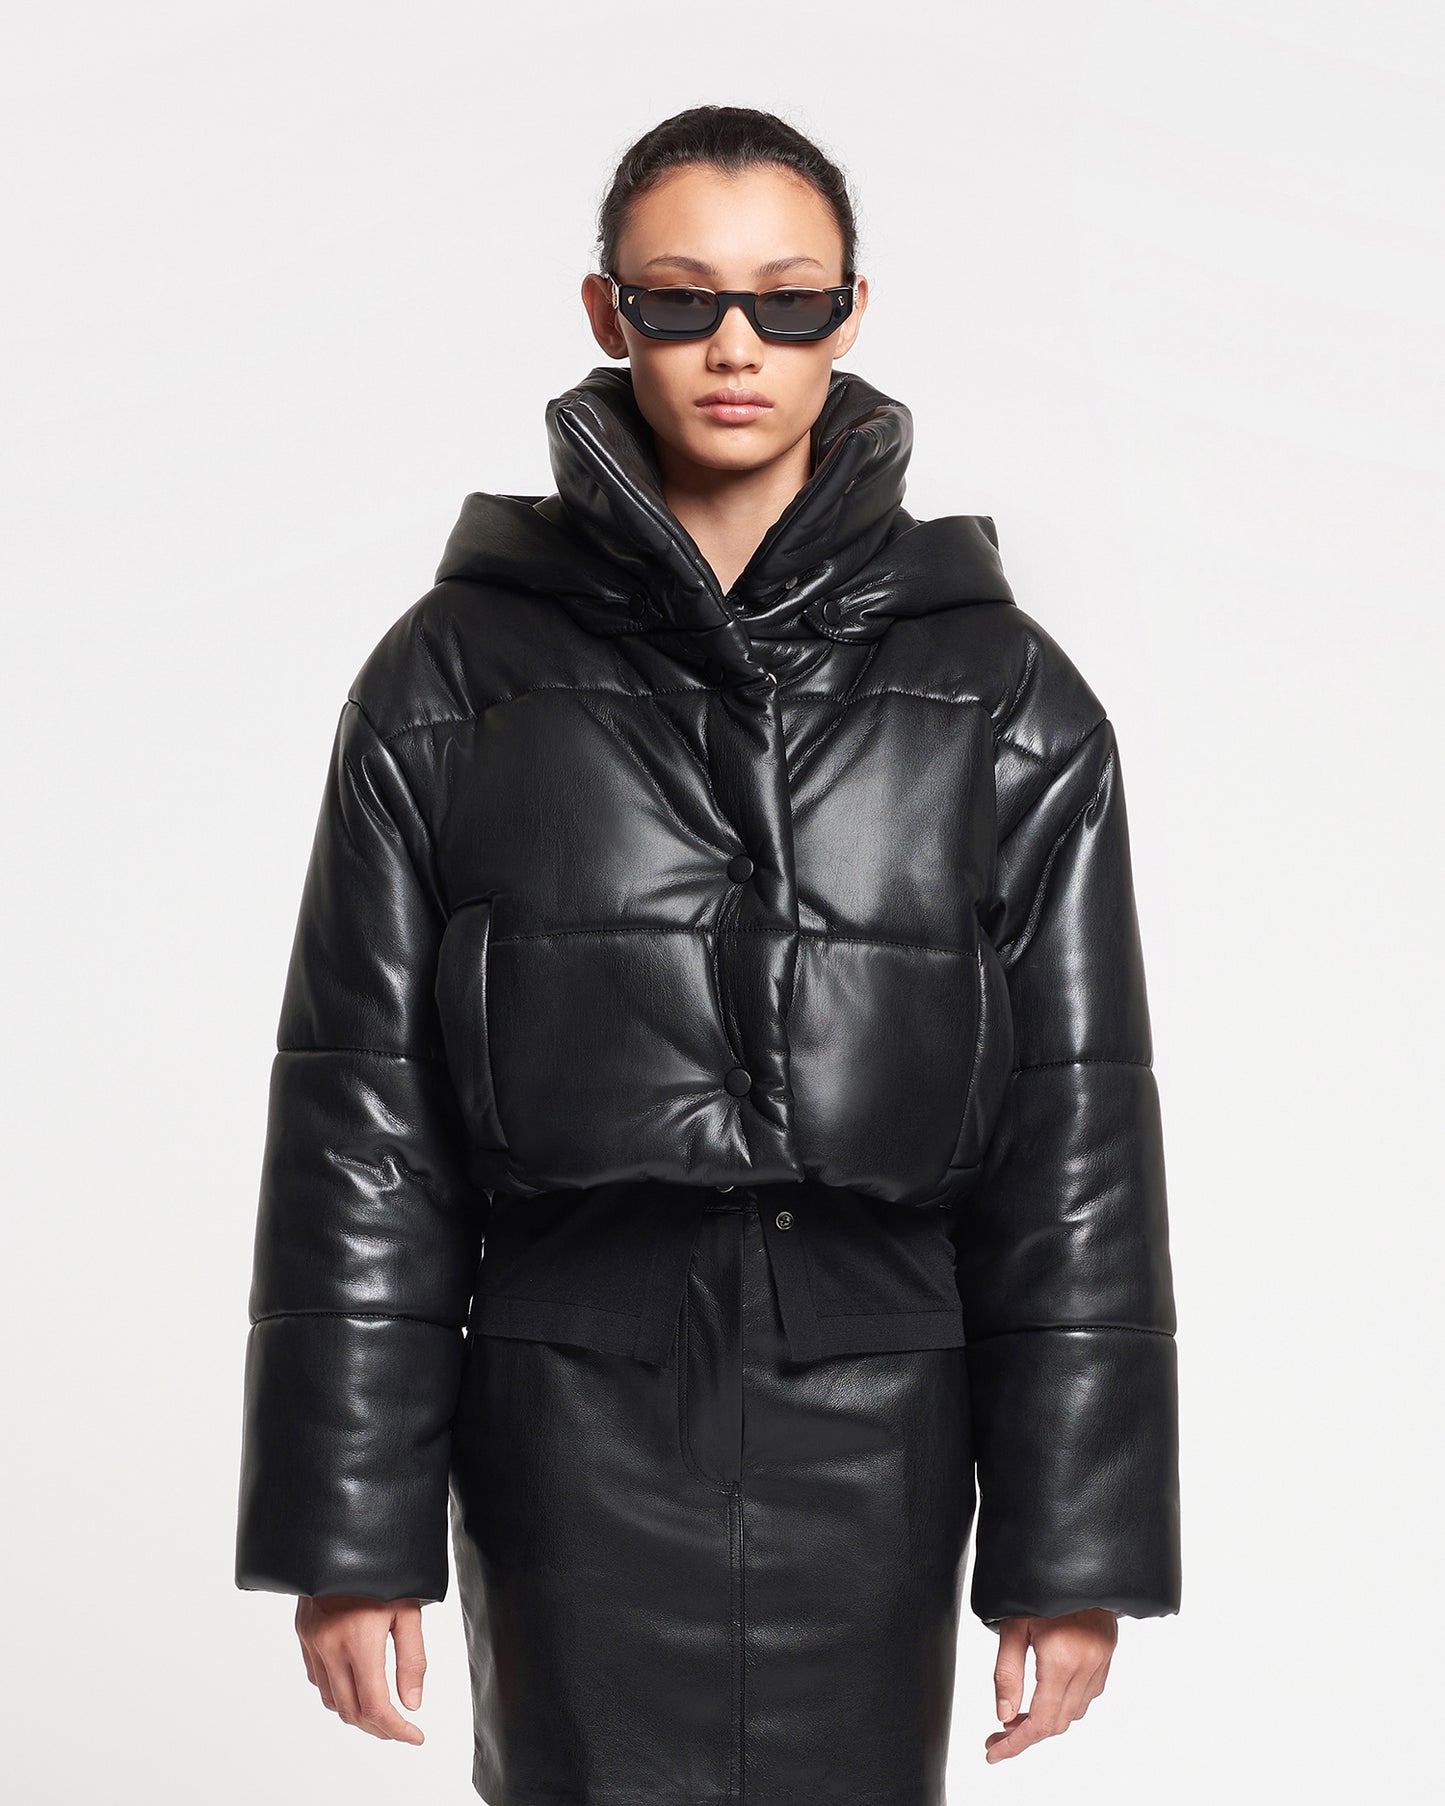 Aveline - Okobor™ Alt-Leather Jacket - Black